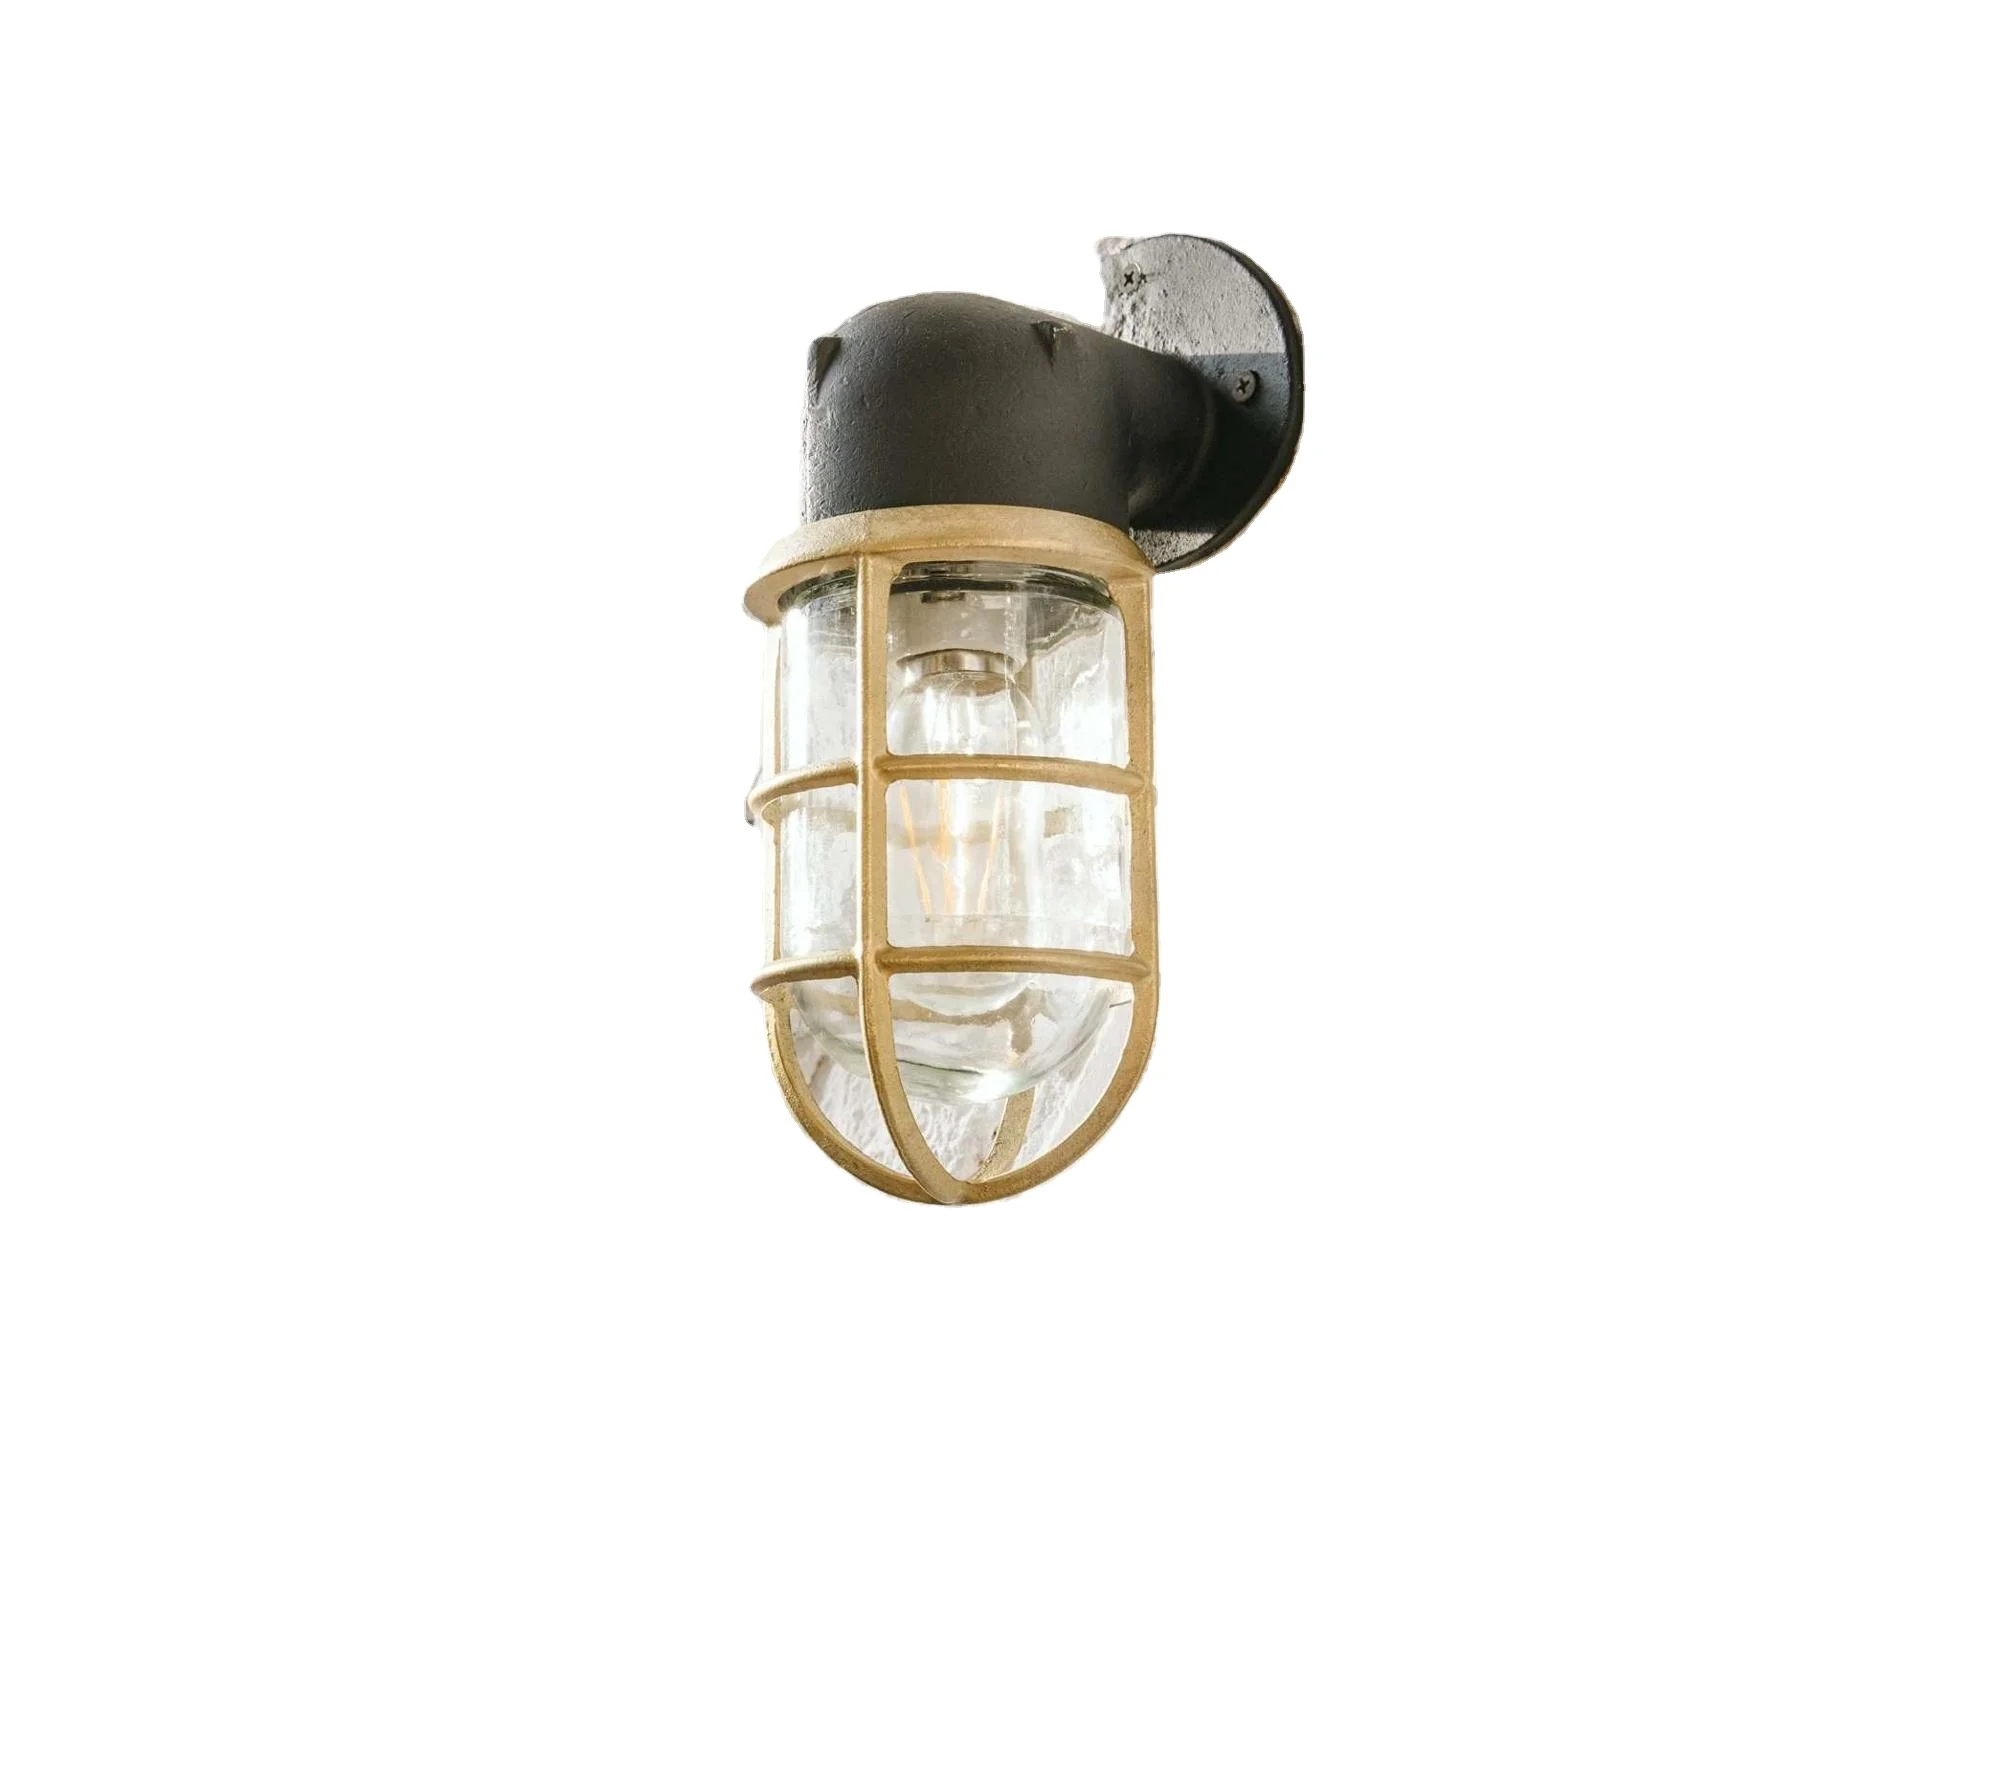 Brass Loft Lighting Industrial Outdoor Waterproof Marine Bulkhead Light Buy Indoor Bulkhead Light Led Bulkhead Light Waterproof Outdoor Wall Light Product On Alibaba Com